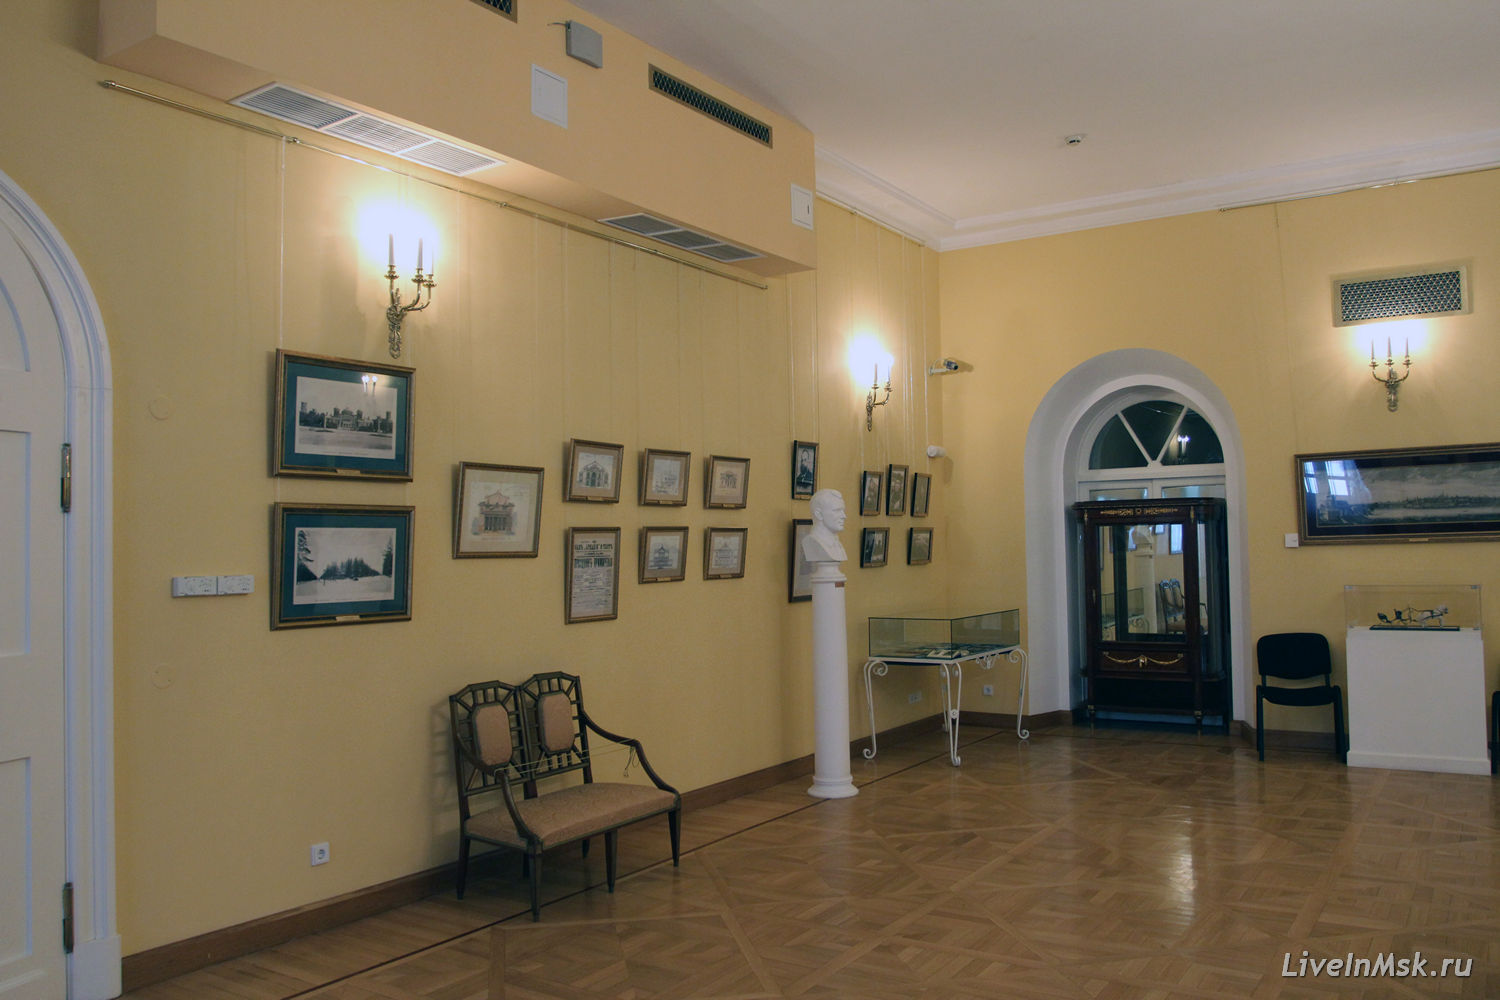 Музей Петровского путевого дворца